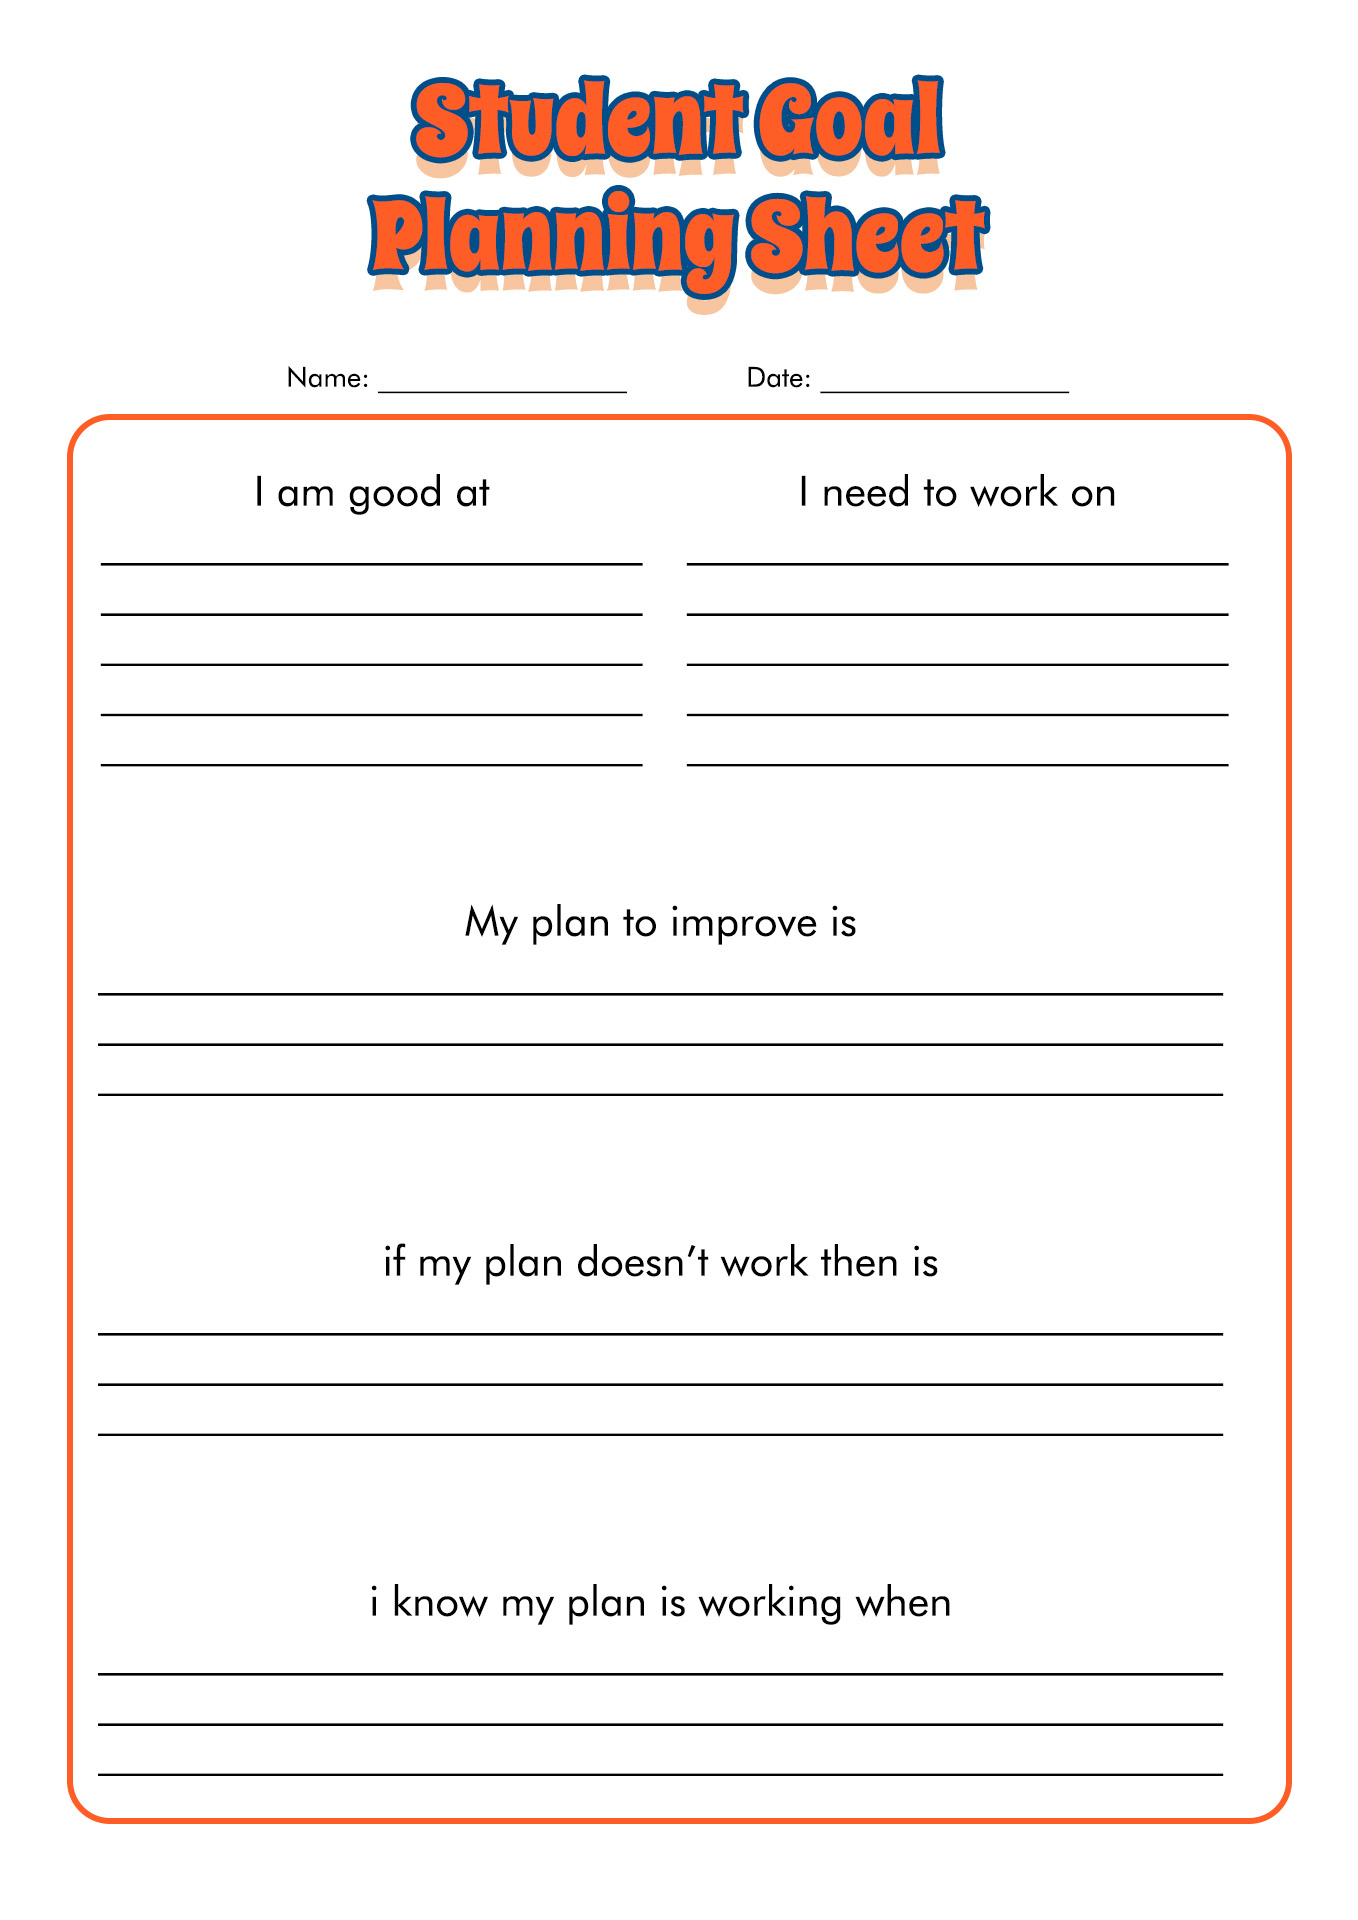 Student Goal Planning Sheet Image